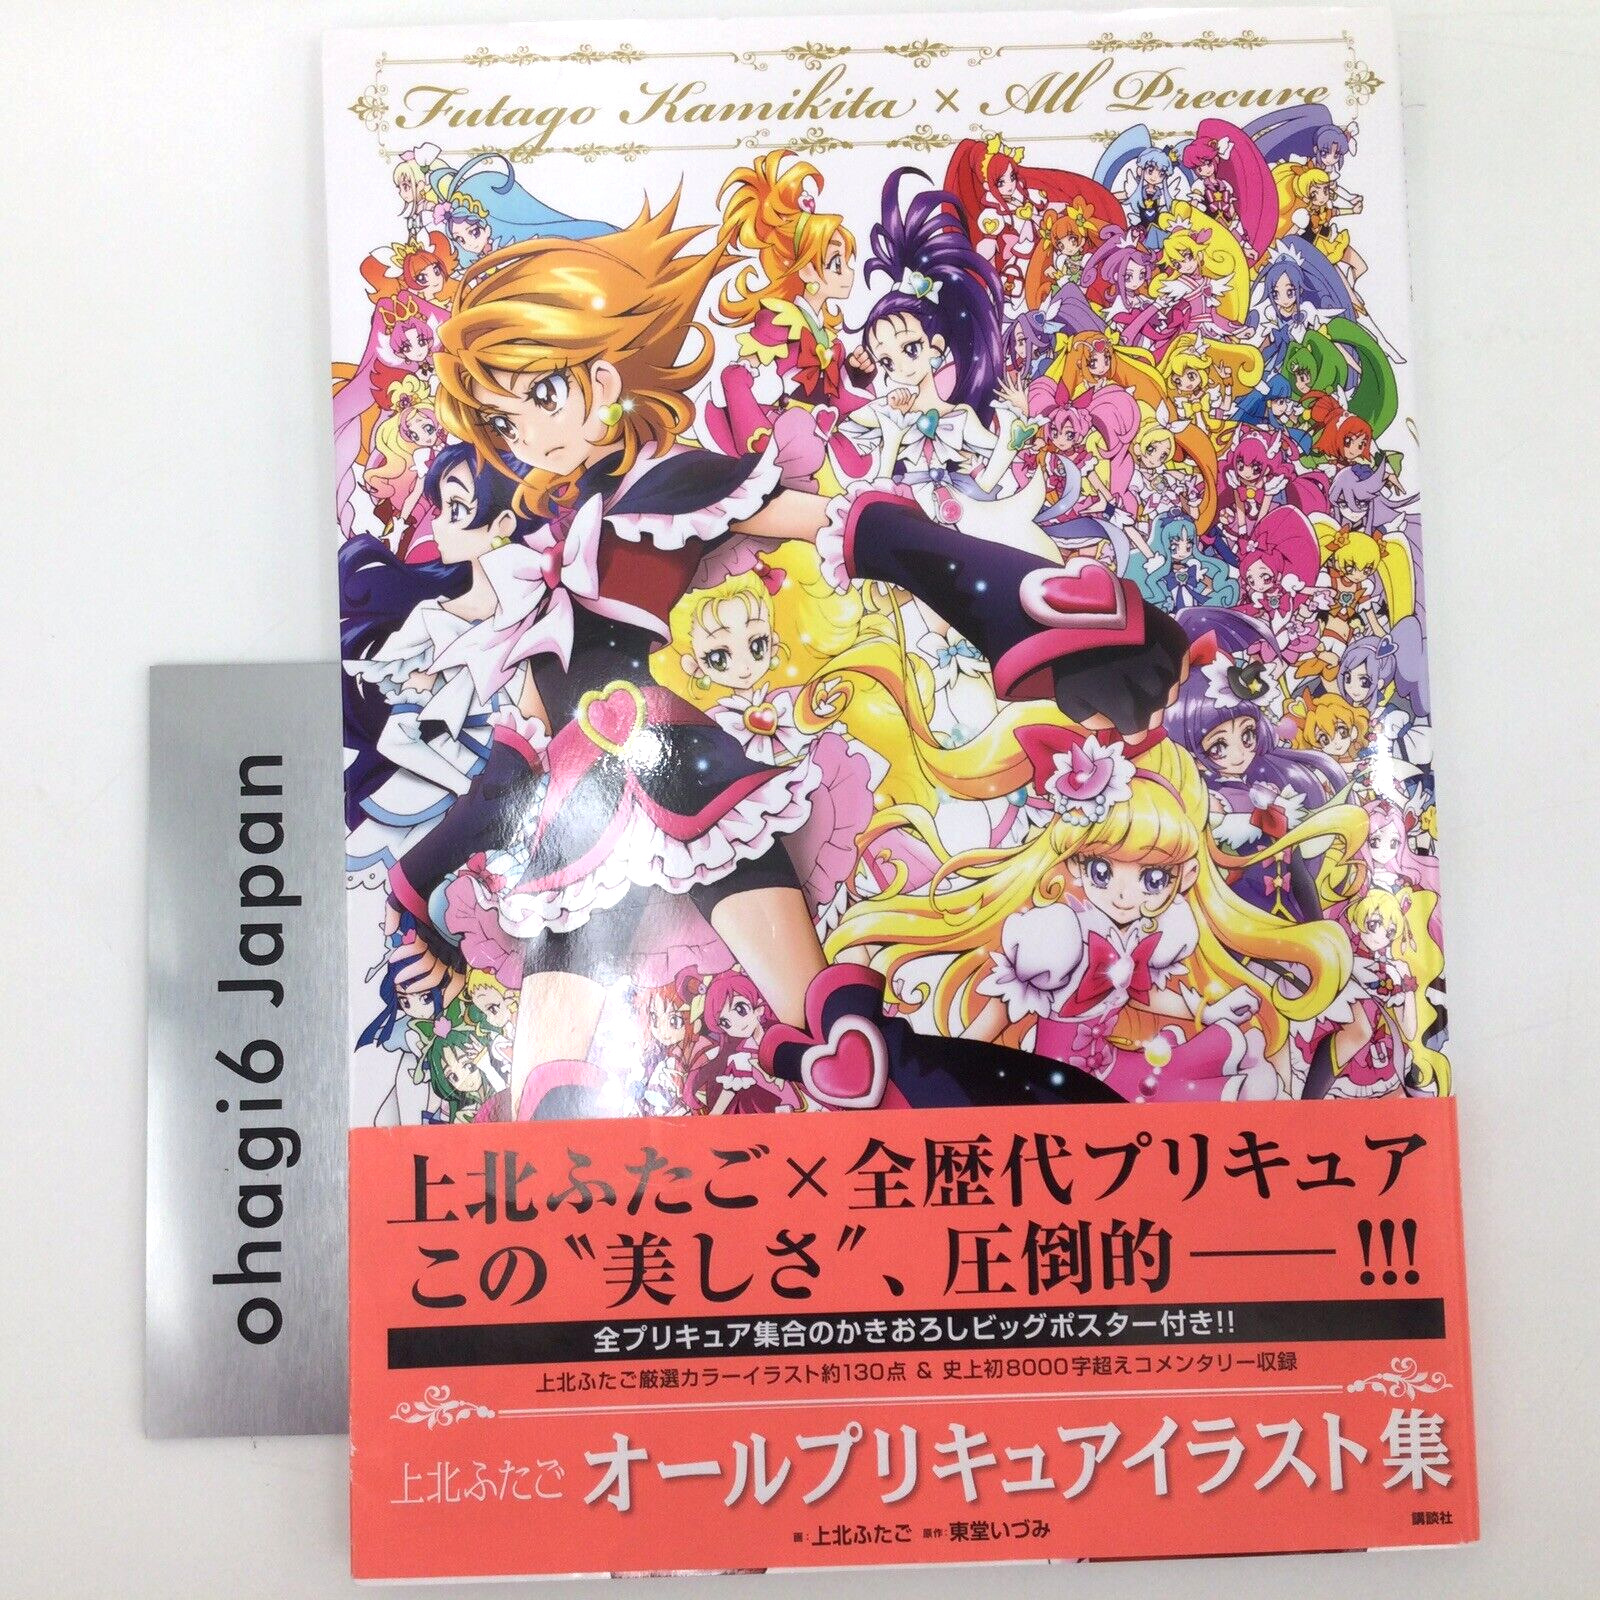 All Precure Illustrations Pretty Cure Art Book by Futago Kamikita w/Poster JP